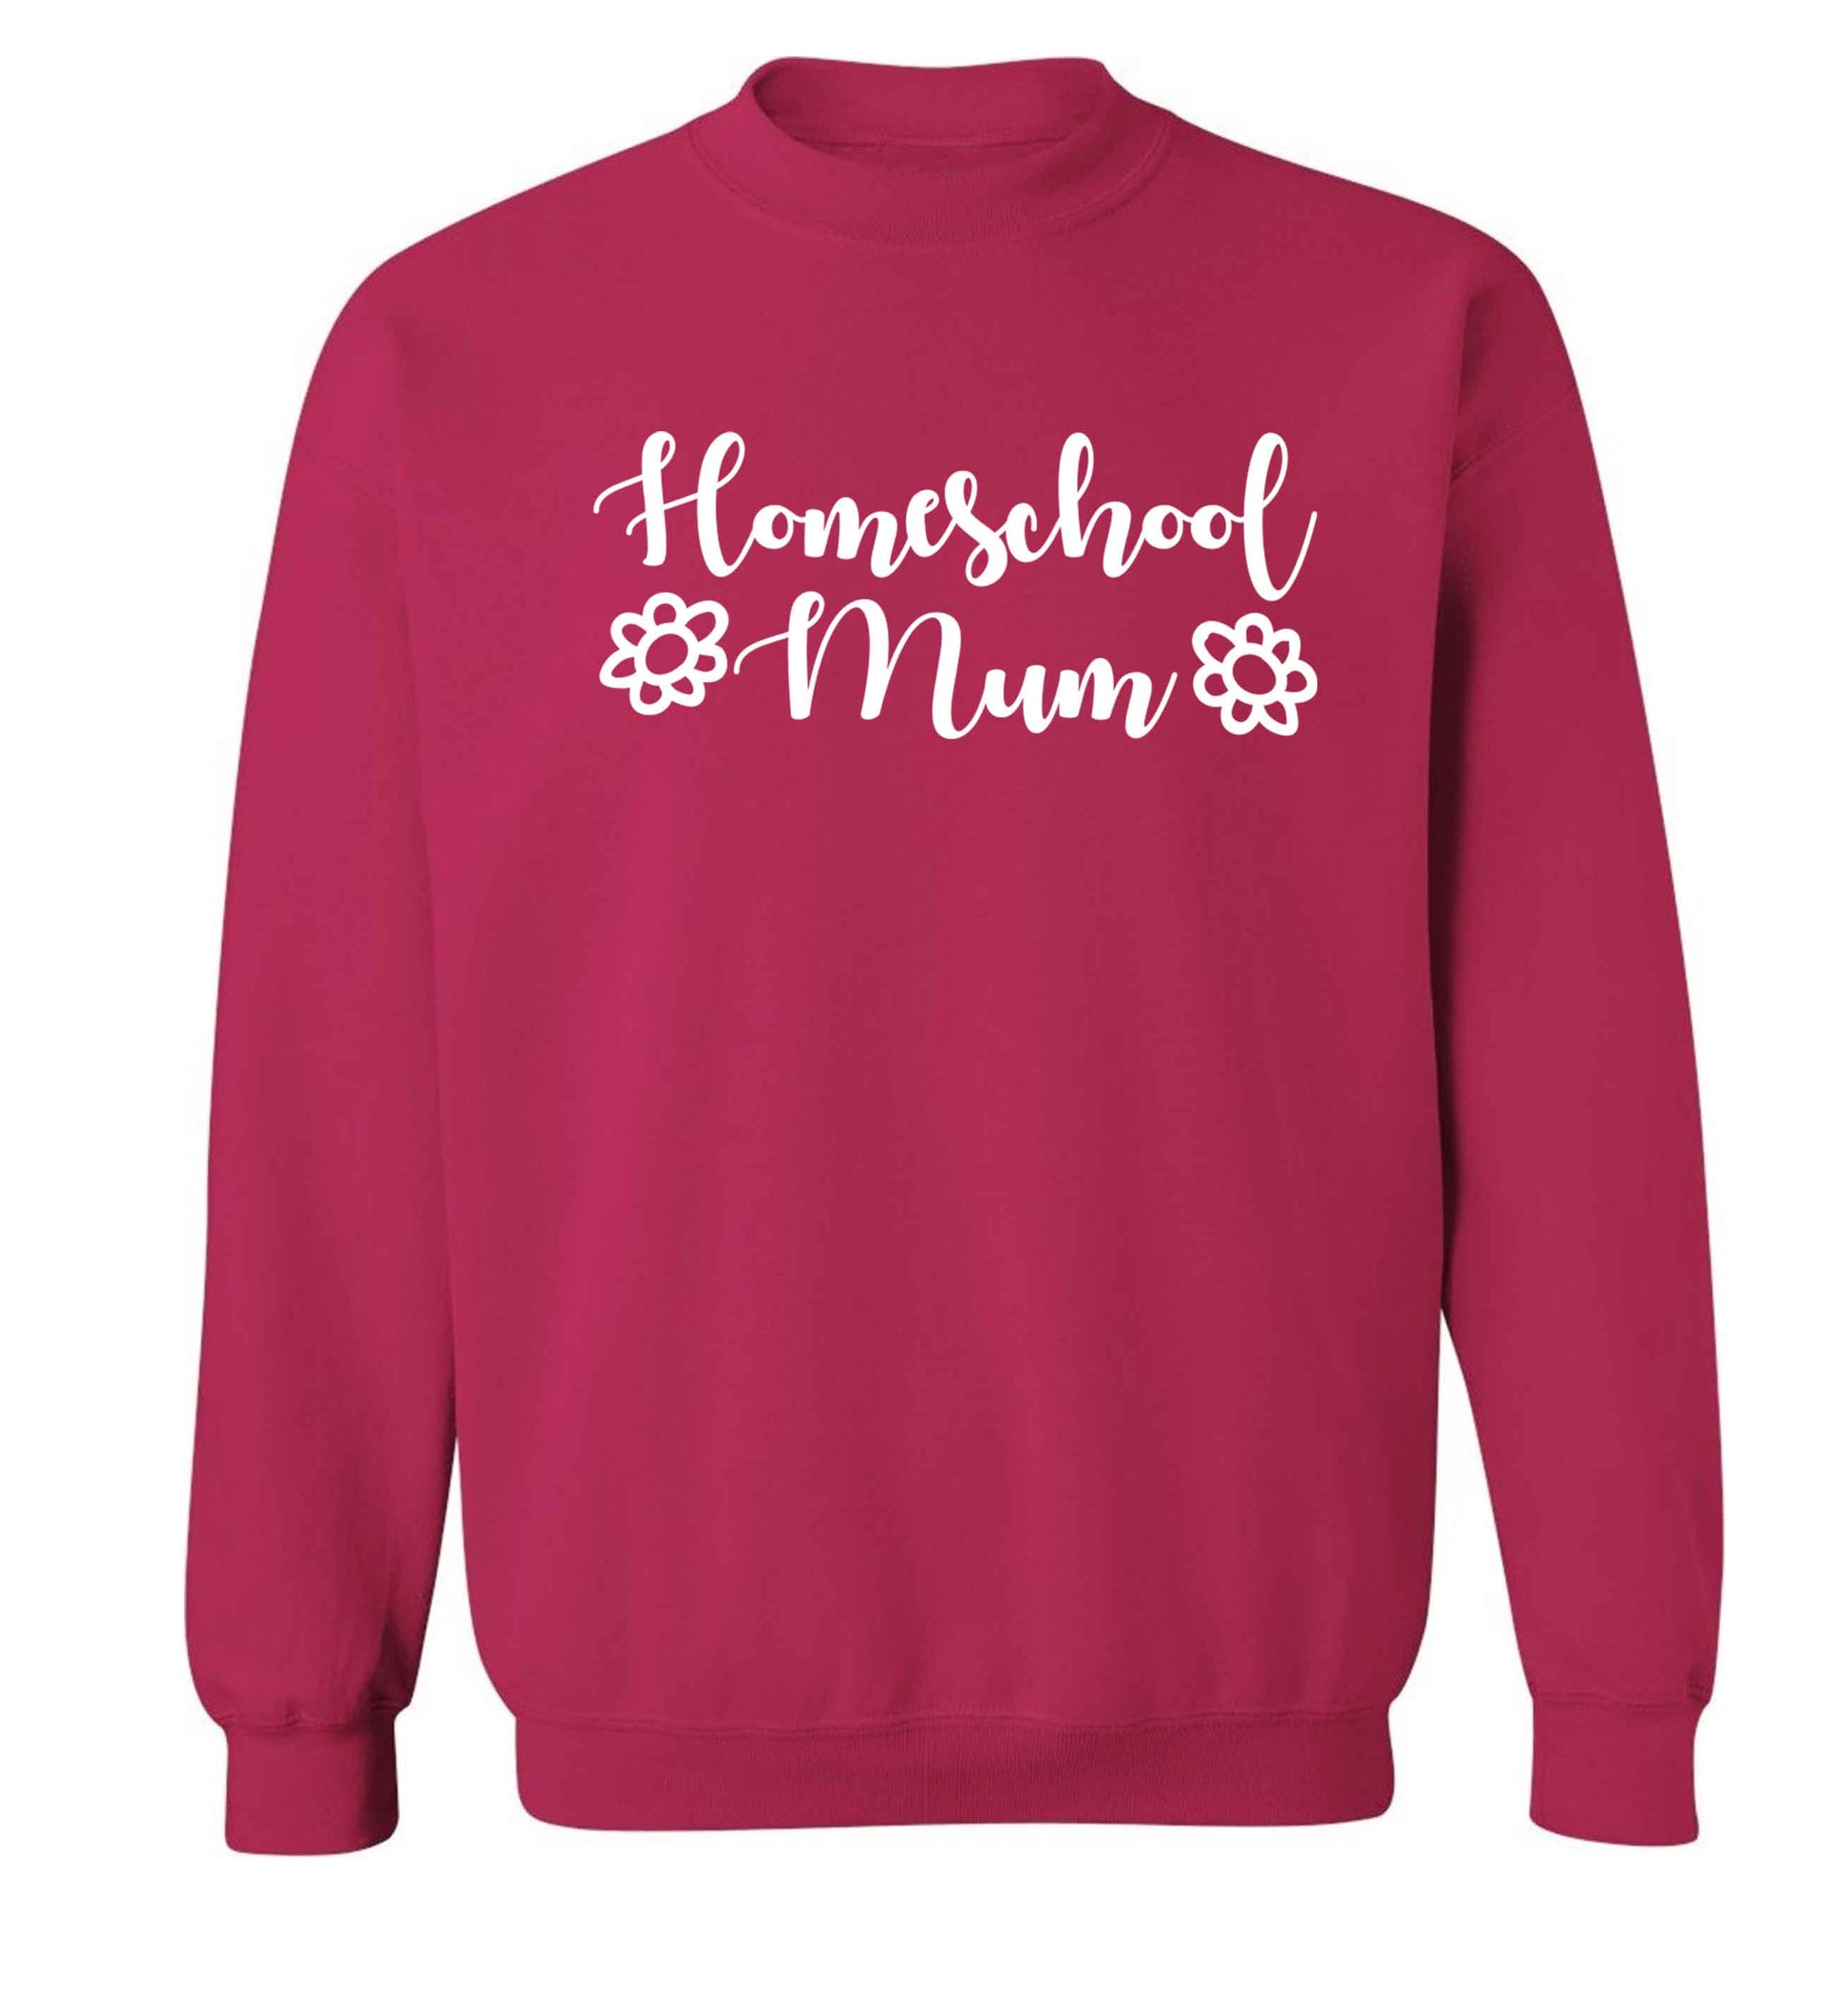 Homeschool mum Adult's unisex pink Sweater 2XL